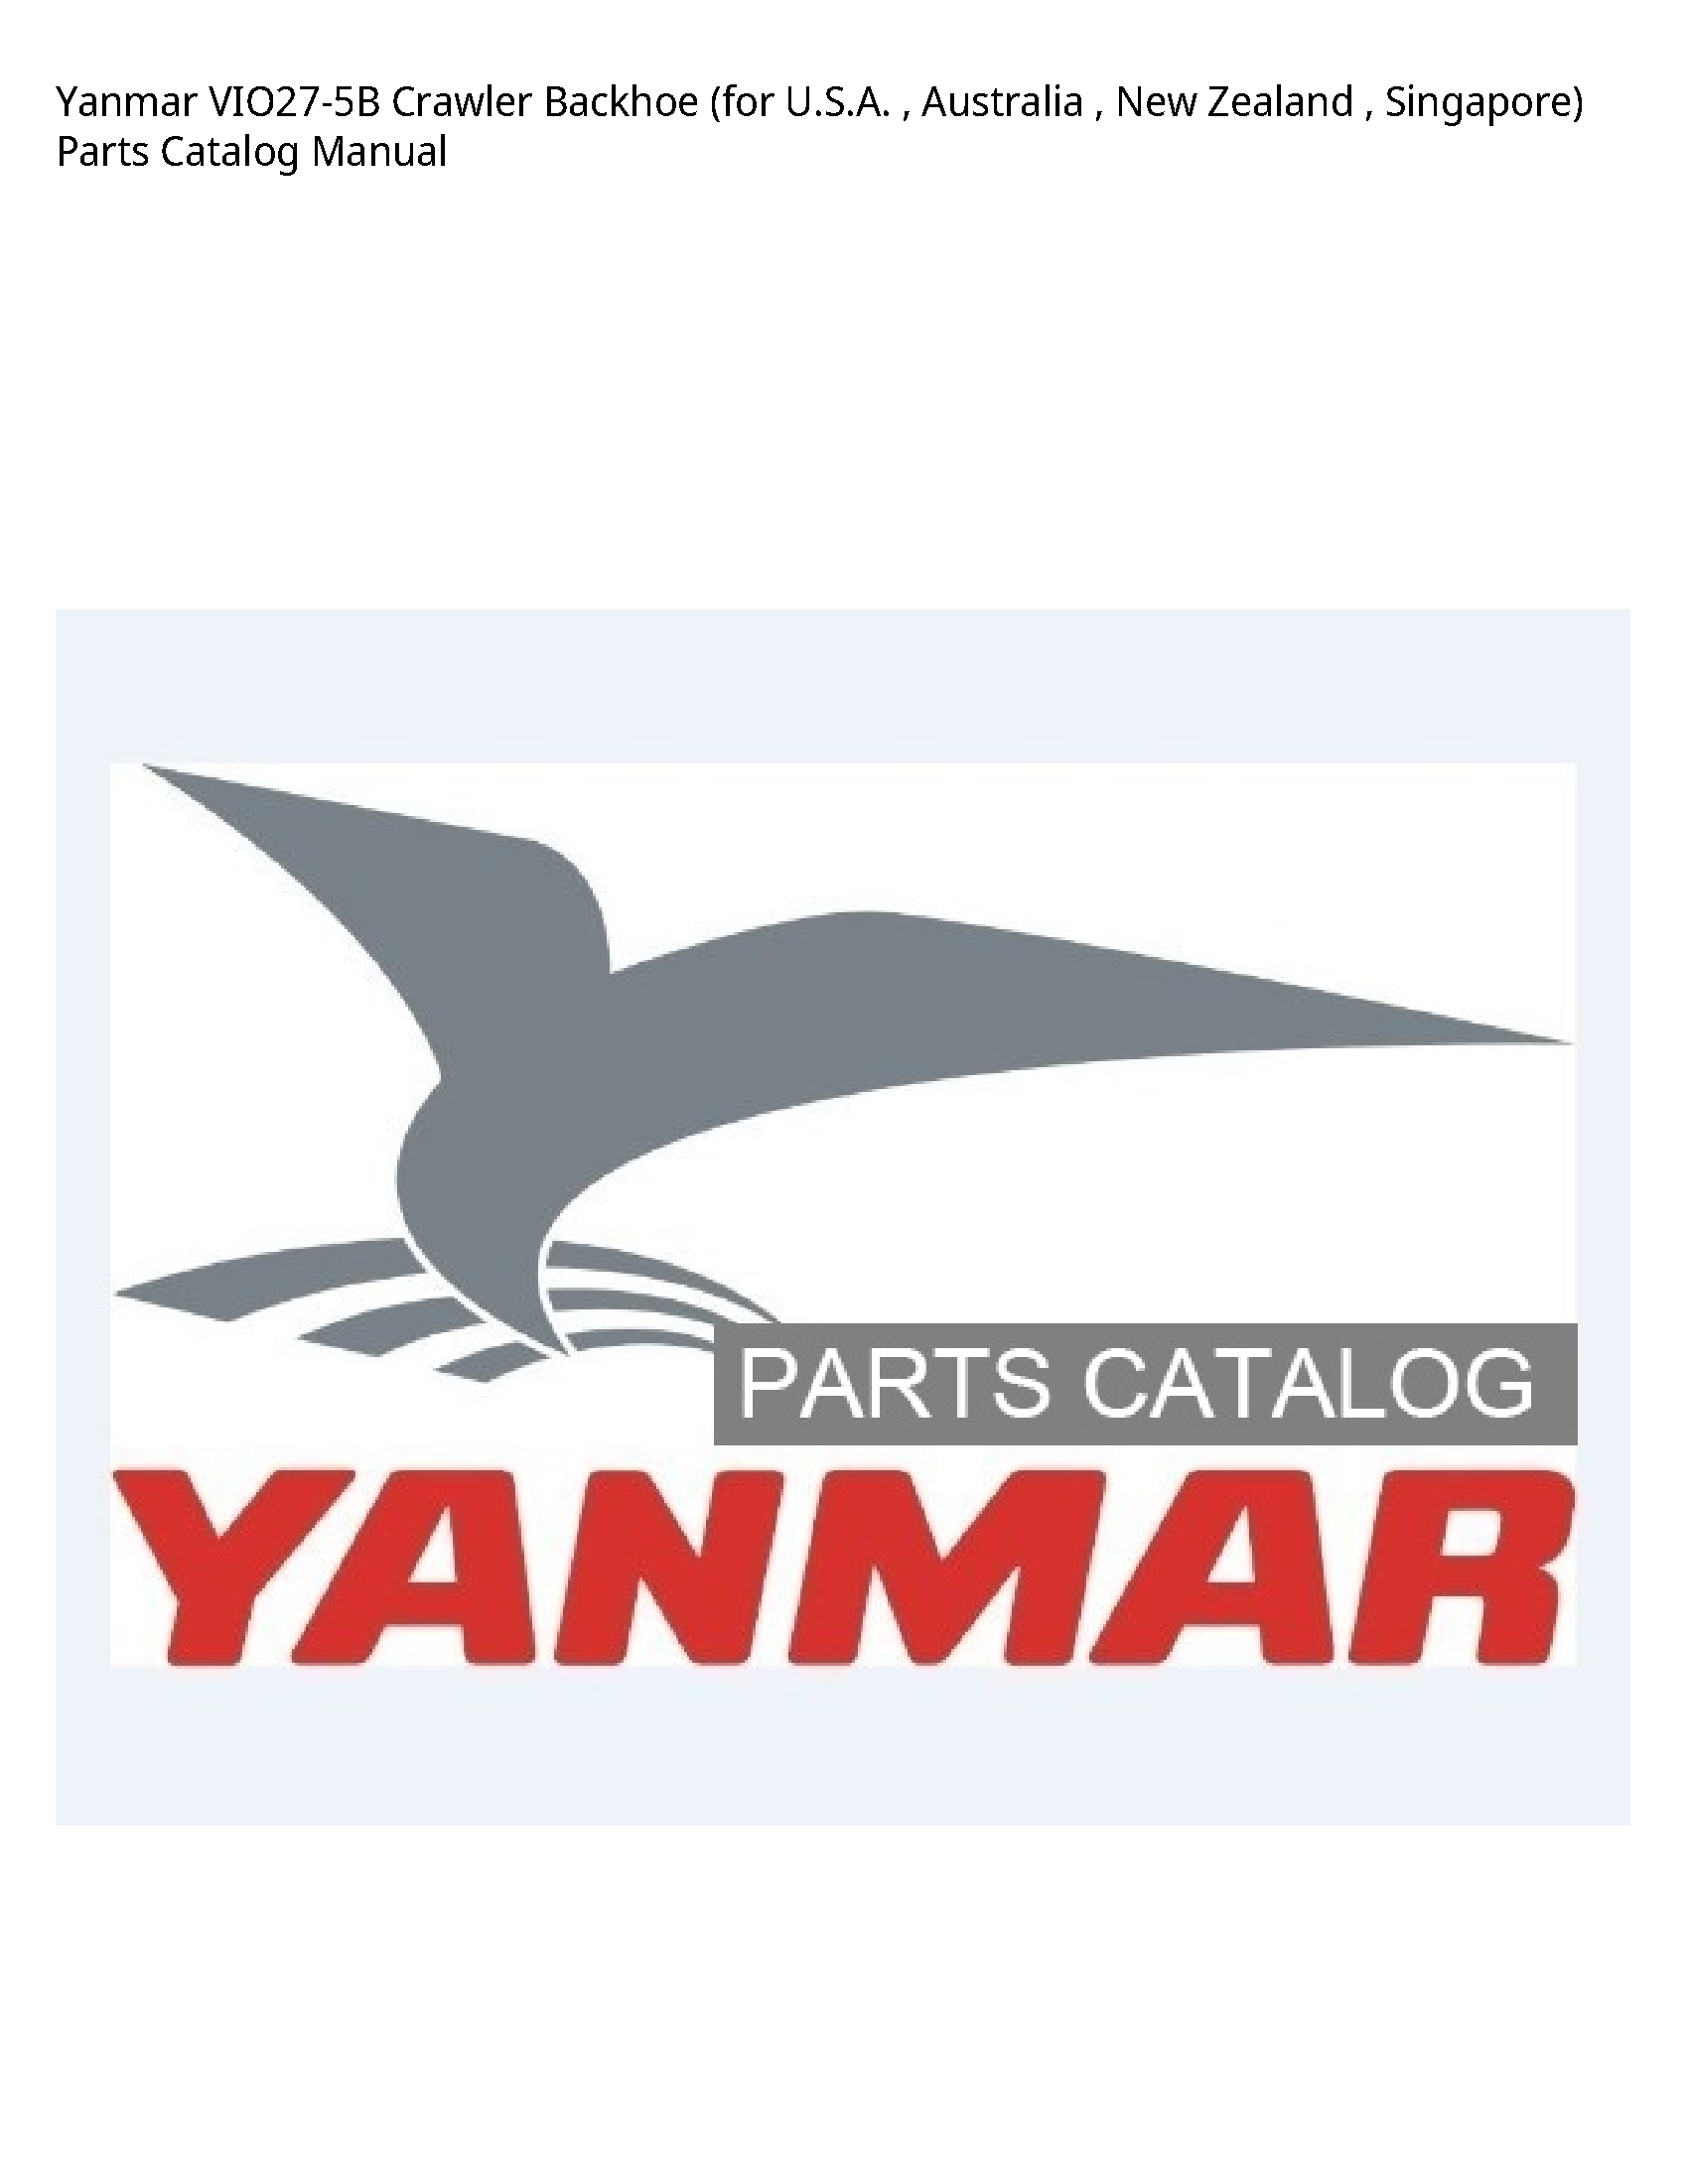 Yanmar VIO27-5B Crawler Backhoe (for U.S.A. Australia New Zealand Singapore) Parts Catalog manual